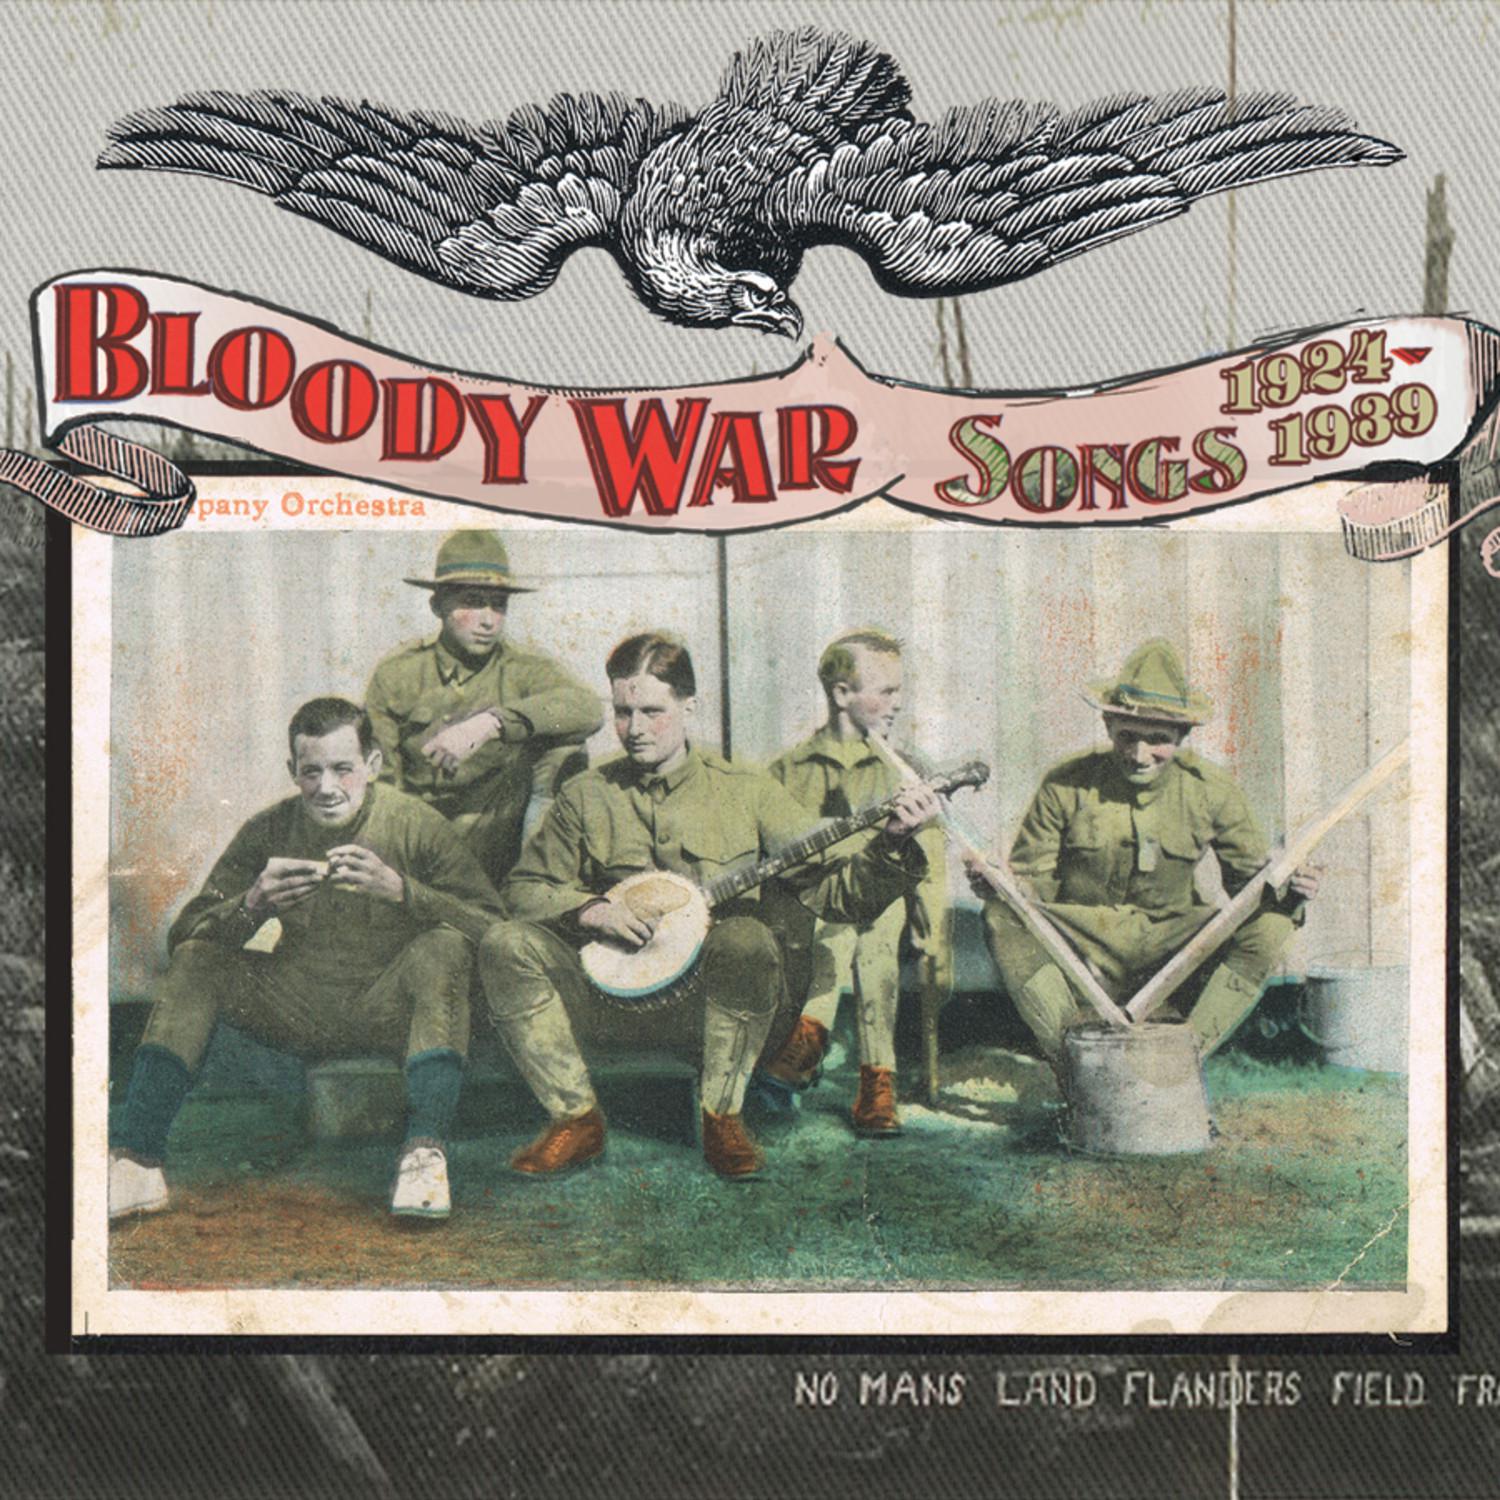 Bloody War : Songs 1924-1939